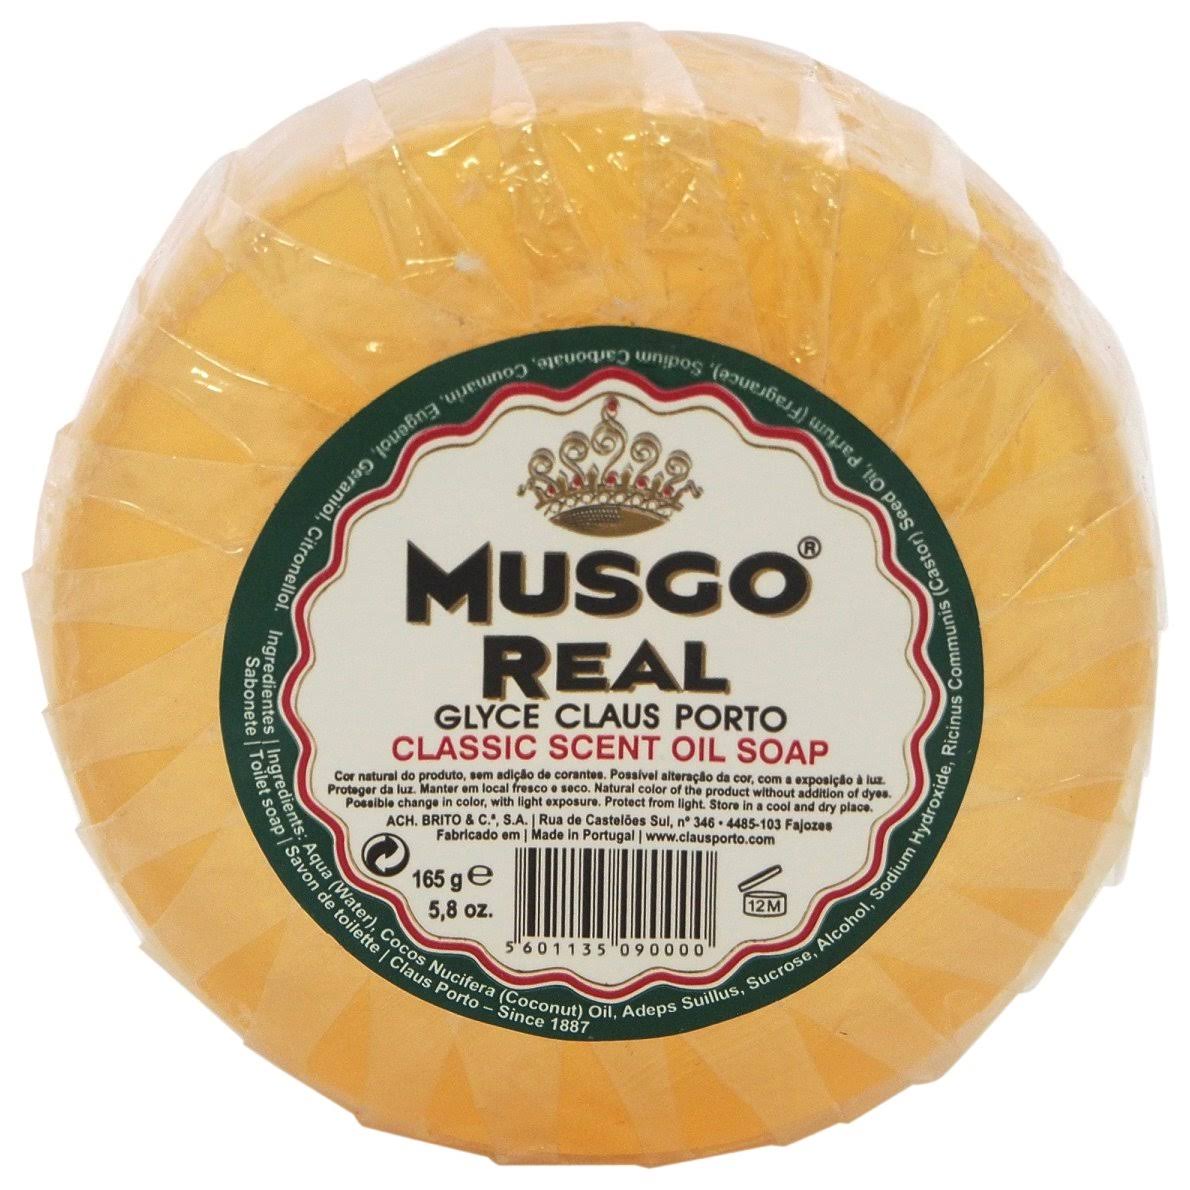 Musgo Real Glycerine Oil Soap - 165g